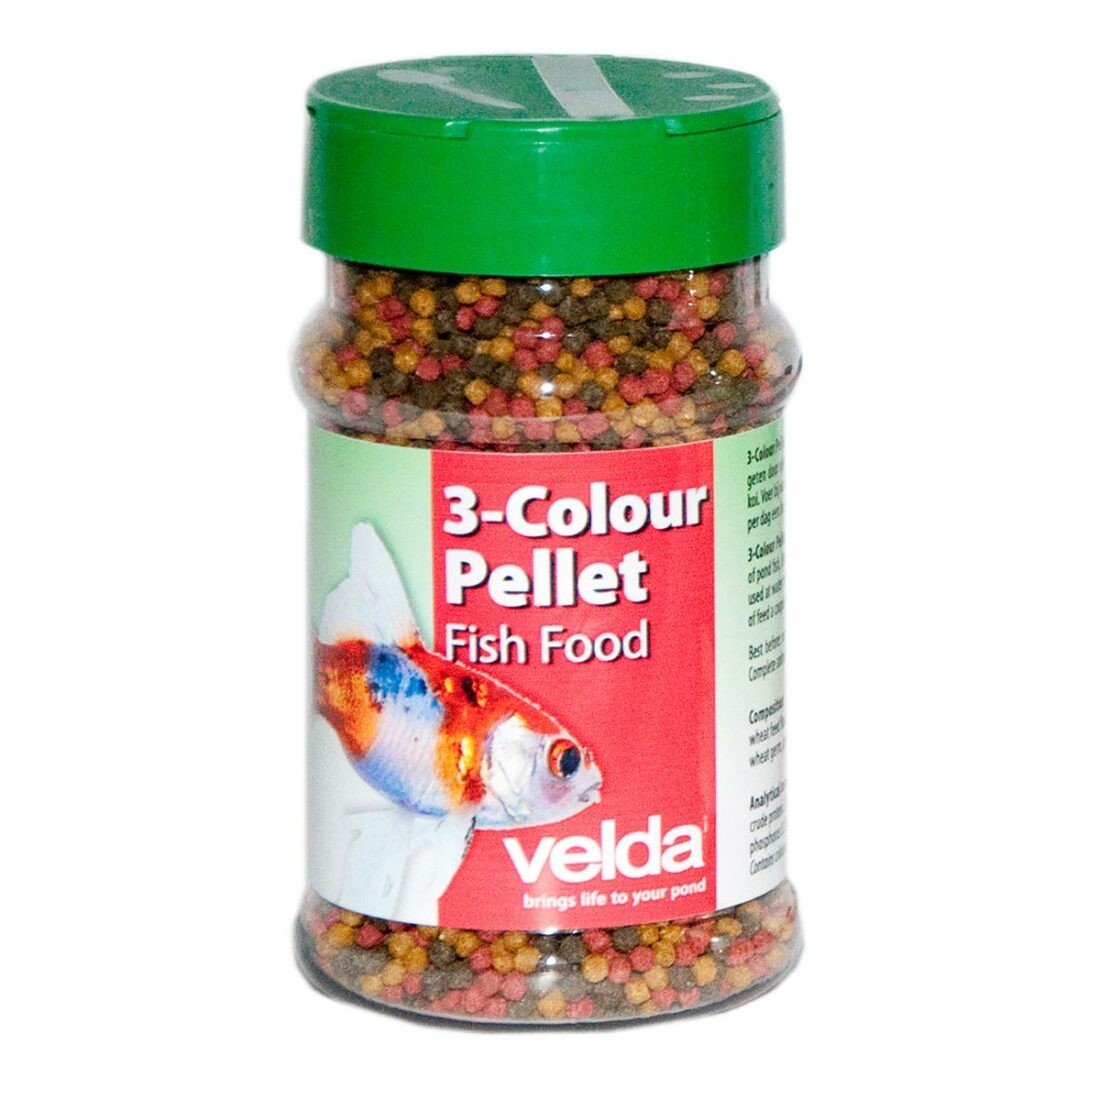 Velda Vivelda 3-Colour Pellet Food